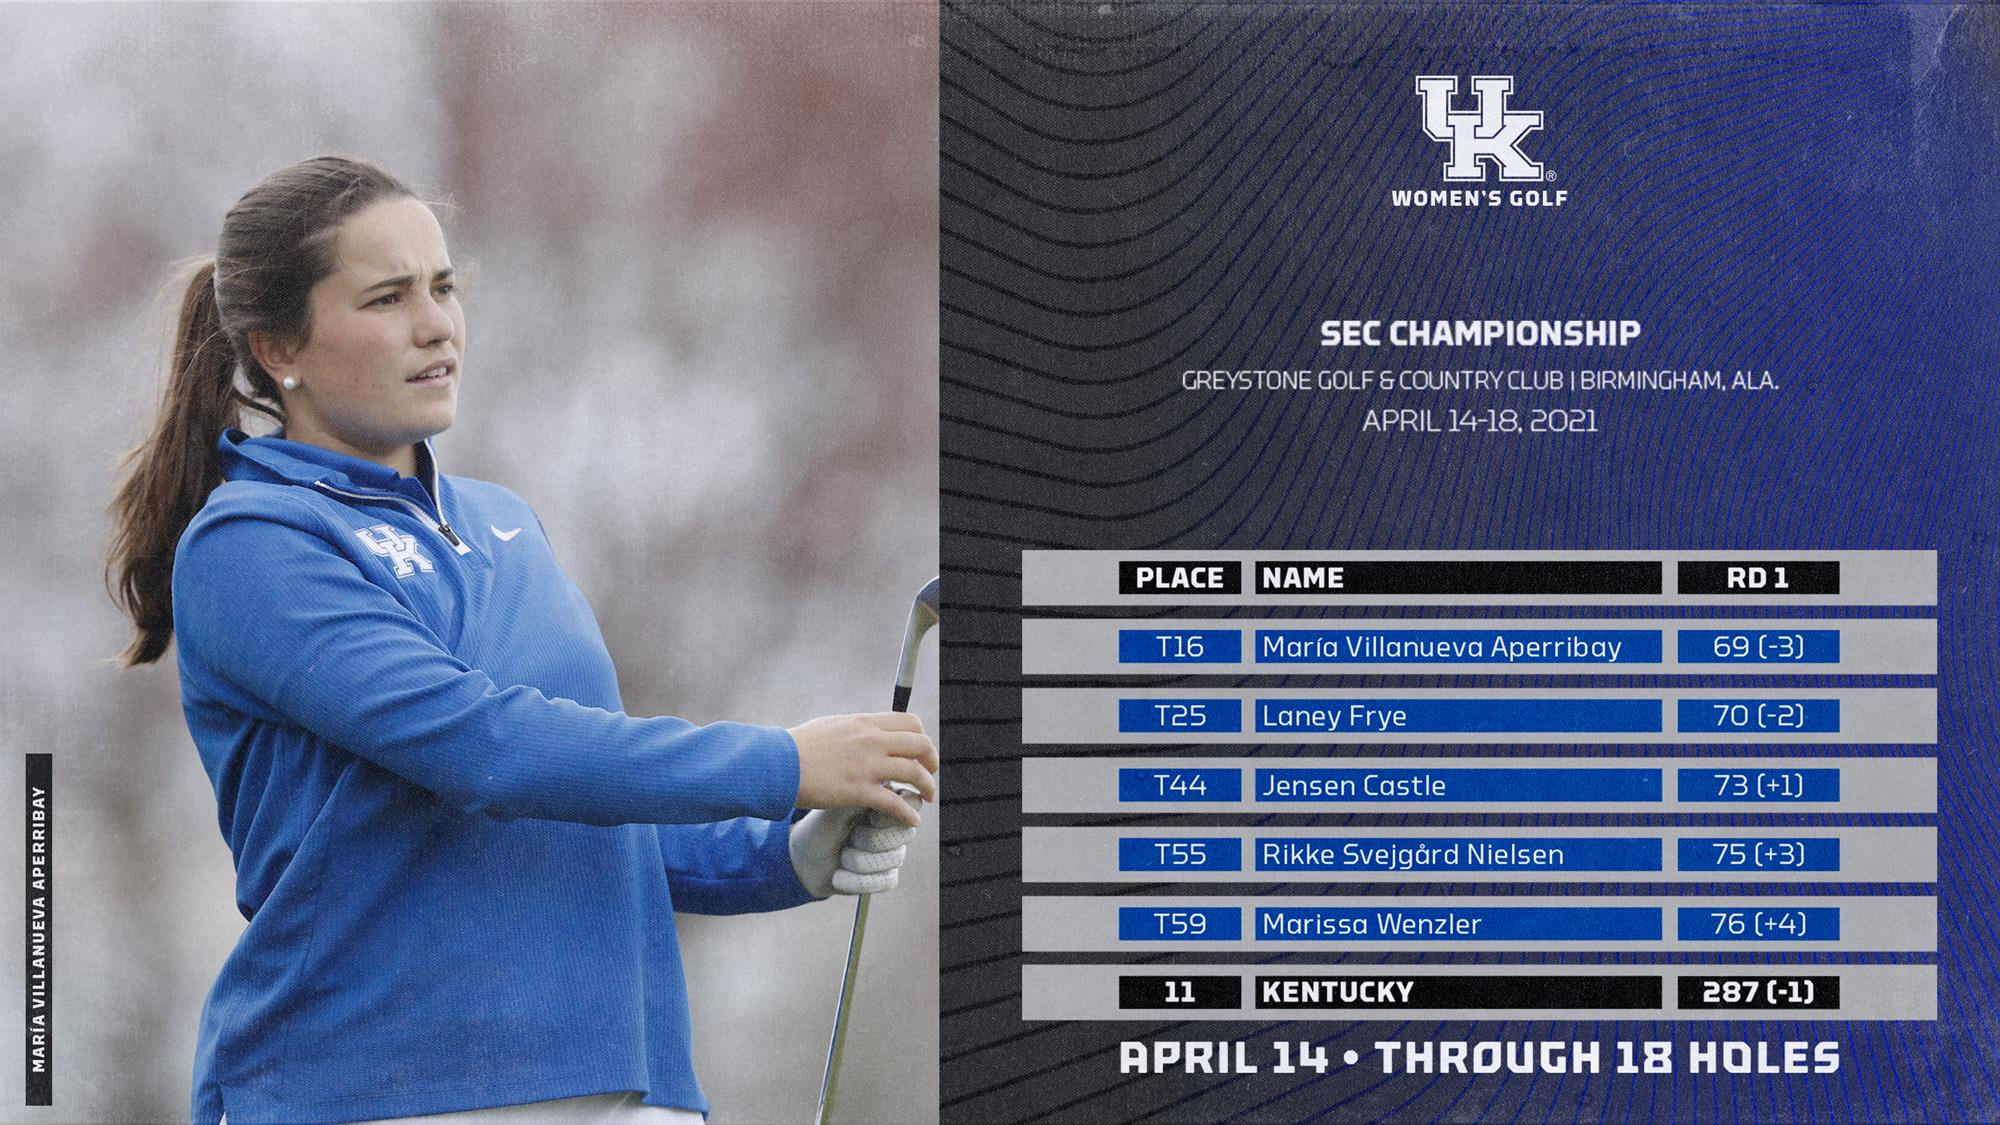 With Fast Start, Cats Card Program-Best SEC Championship Score